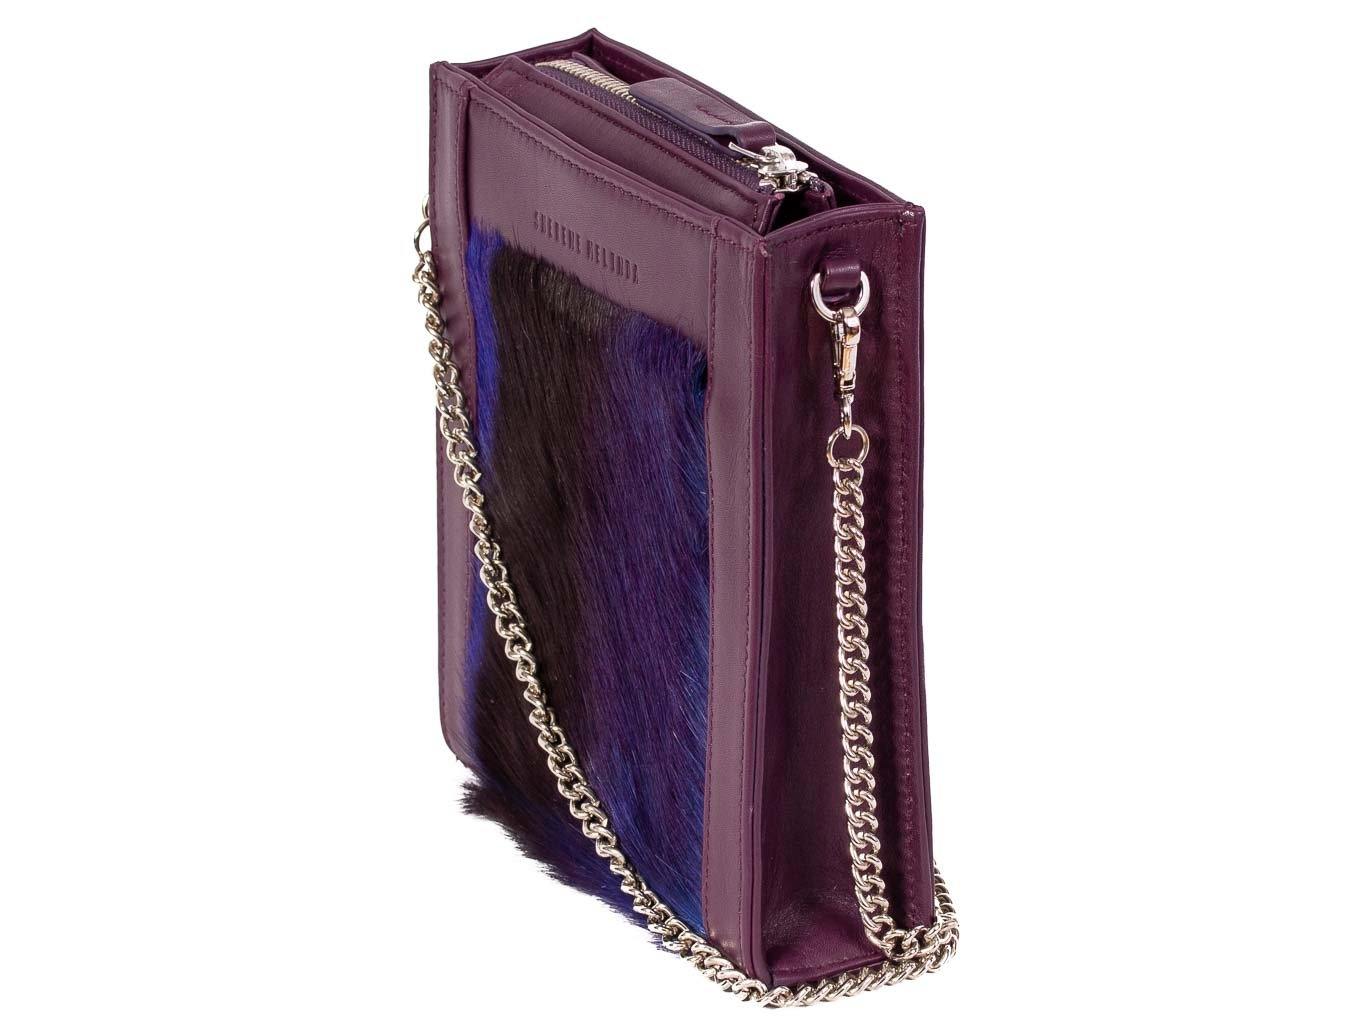 Messenger Springbok Handbag in Deep Purple with a stripe feature by Sherene Melinda side angle